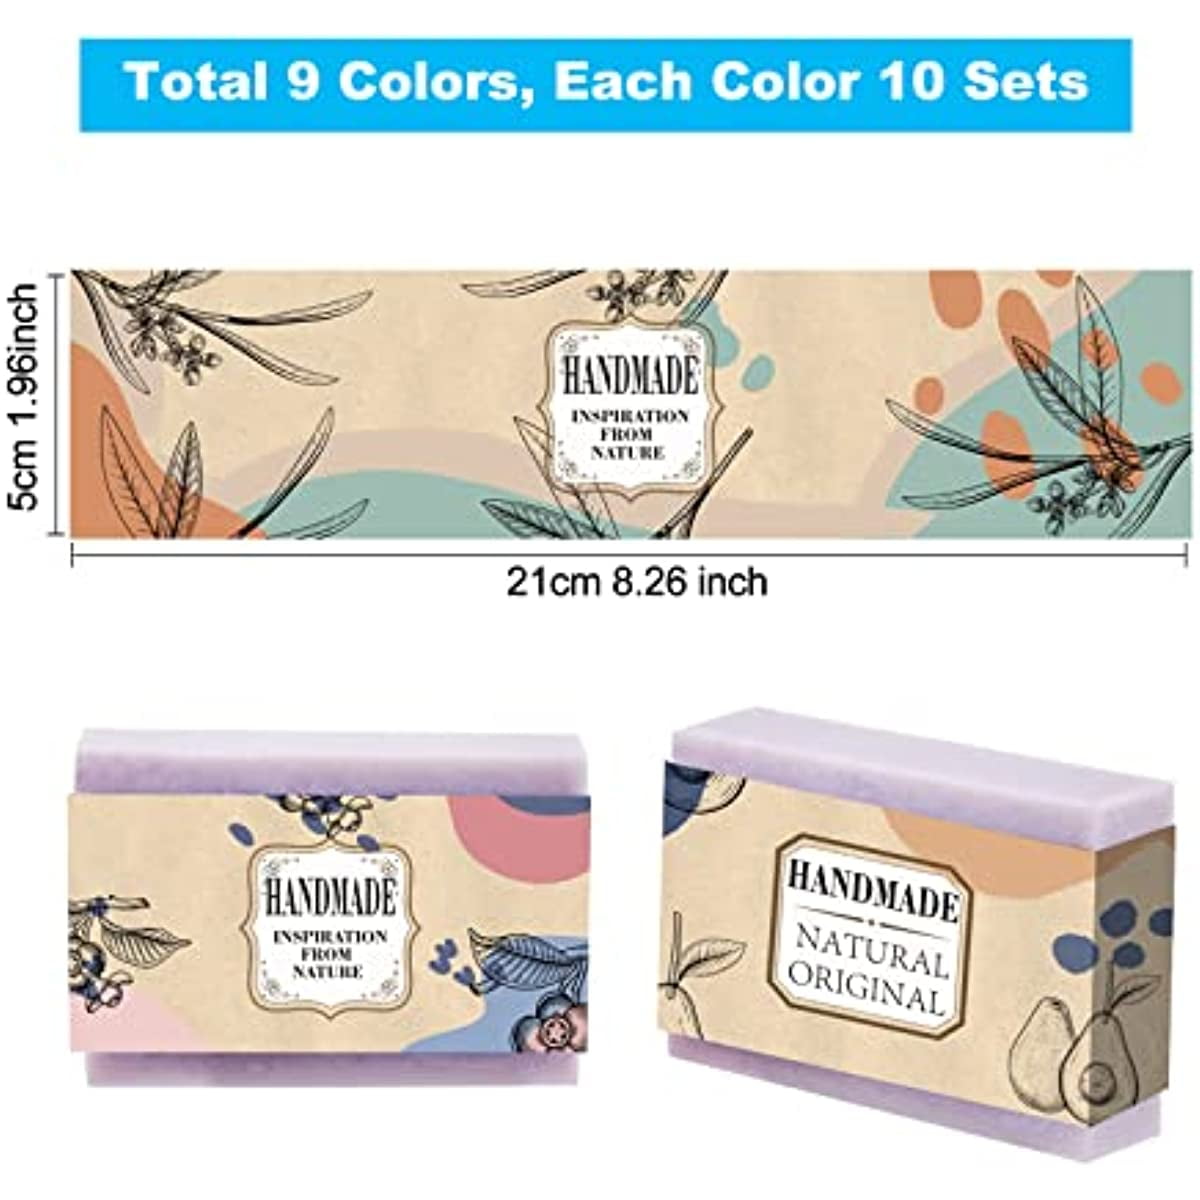 Pack of 90 Handmade Packaging Label Tape, 9 Styles Lavender Blossom Daisy  Honeysuckle Hydrangea Flower Soap Paper Wrapper Label - AliExpress